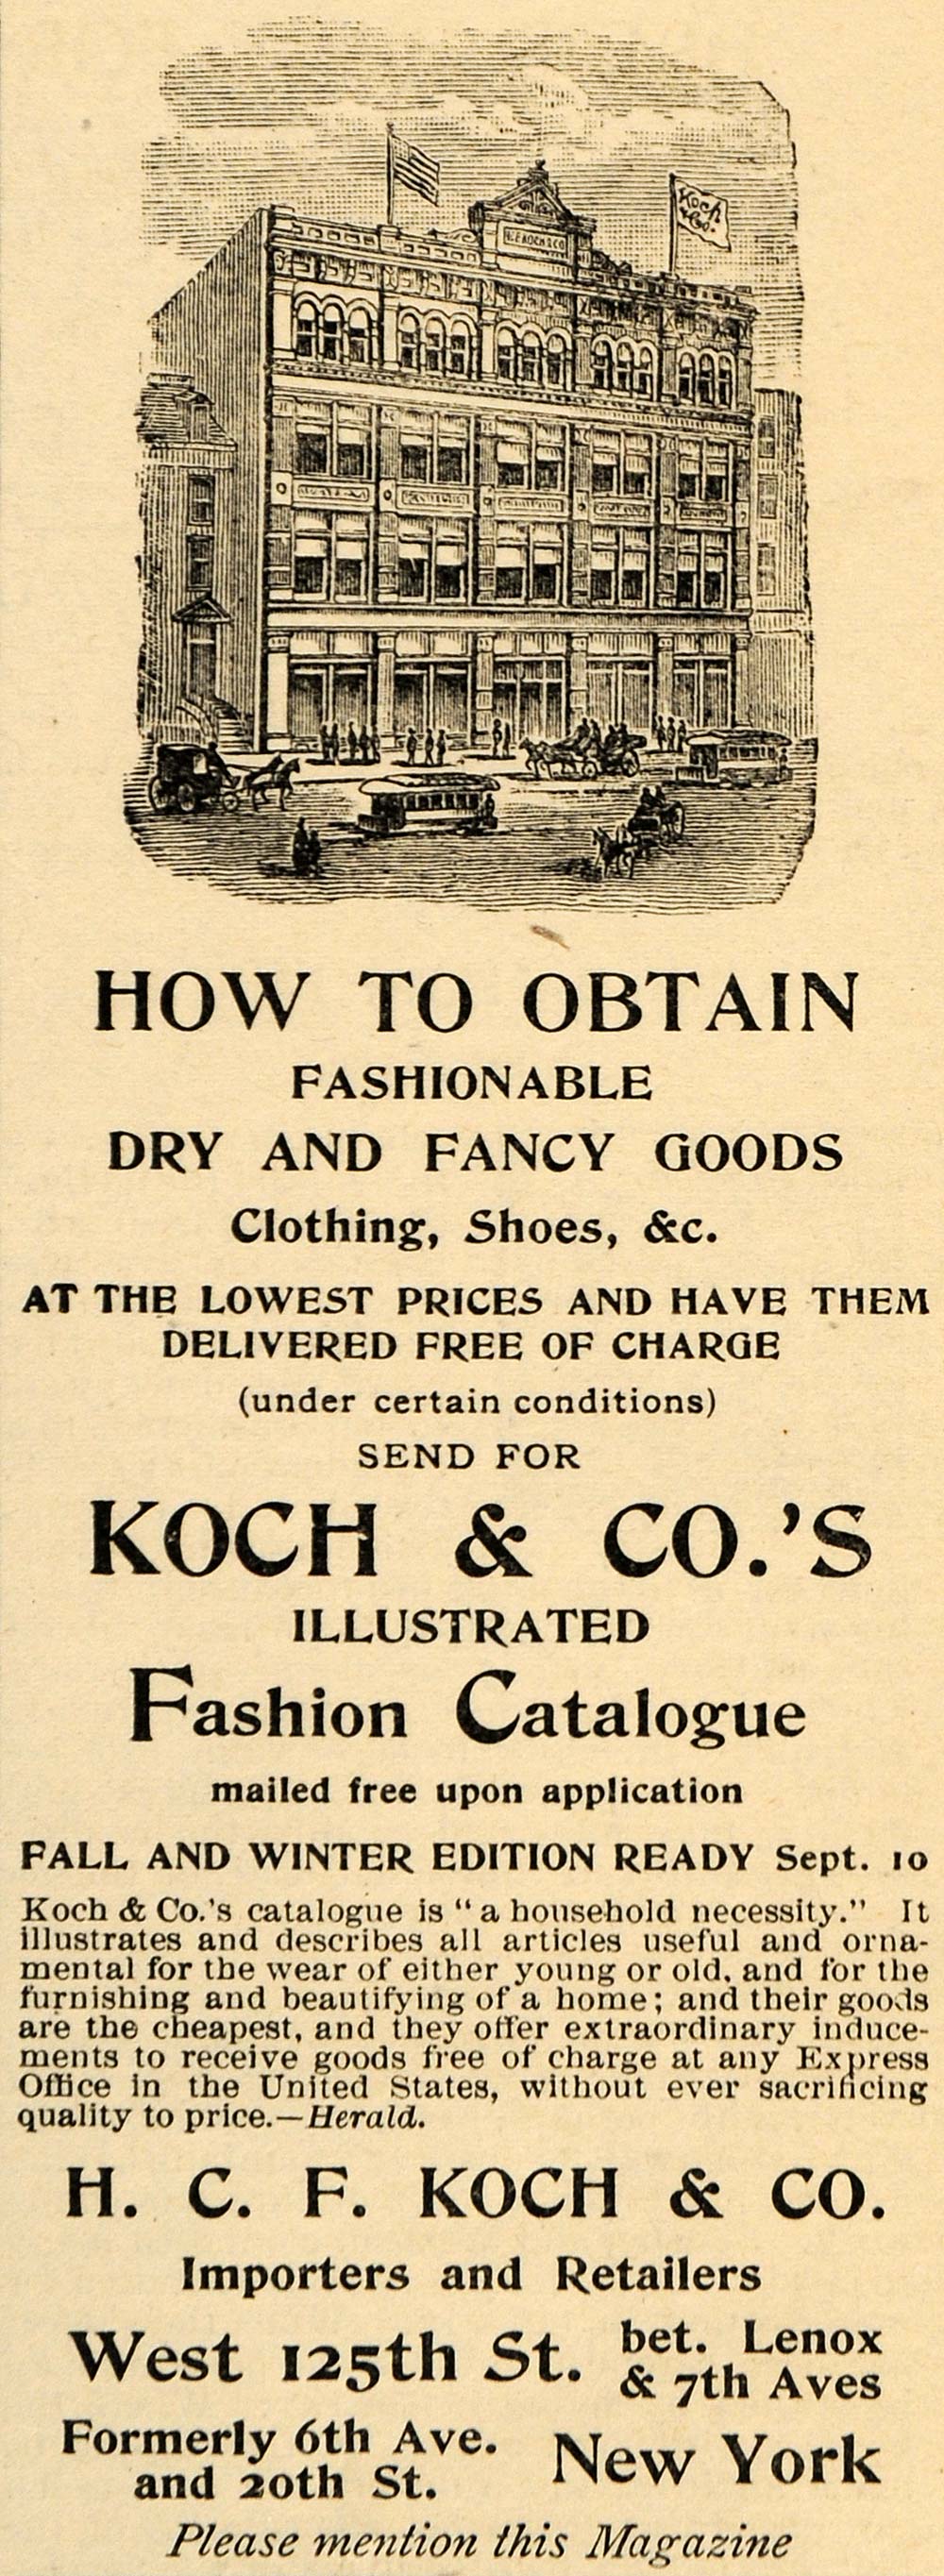 1892 Ad H. C. F. Kock Fashion Clothing Shoes New York - ORIGINAL LHJ4